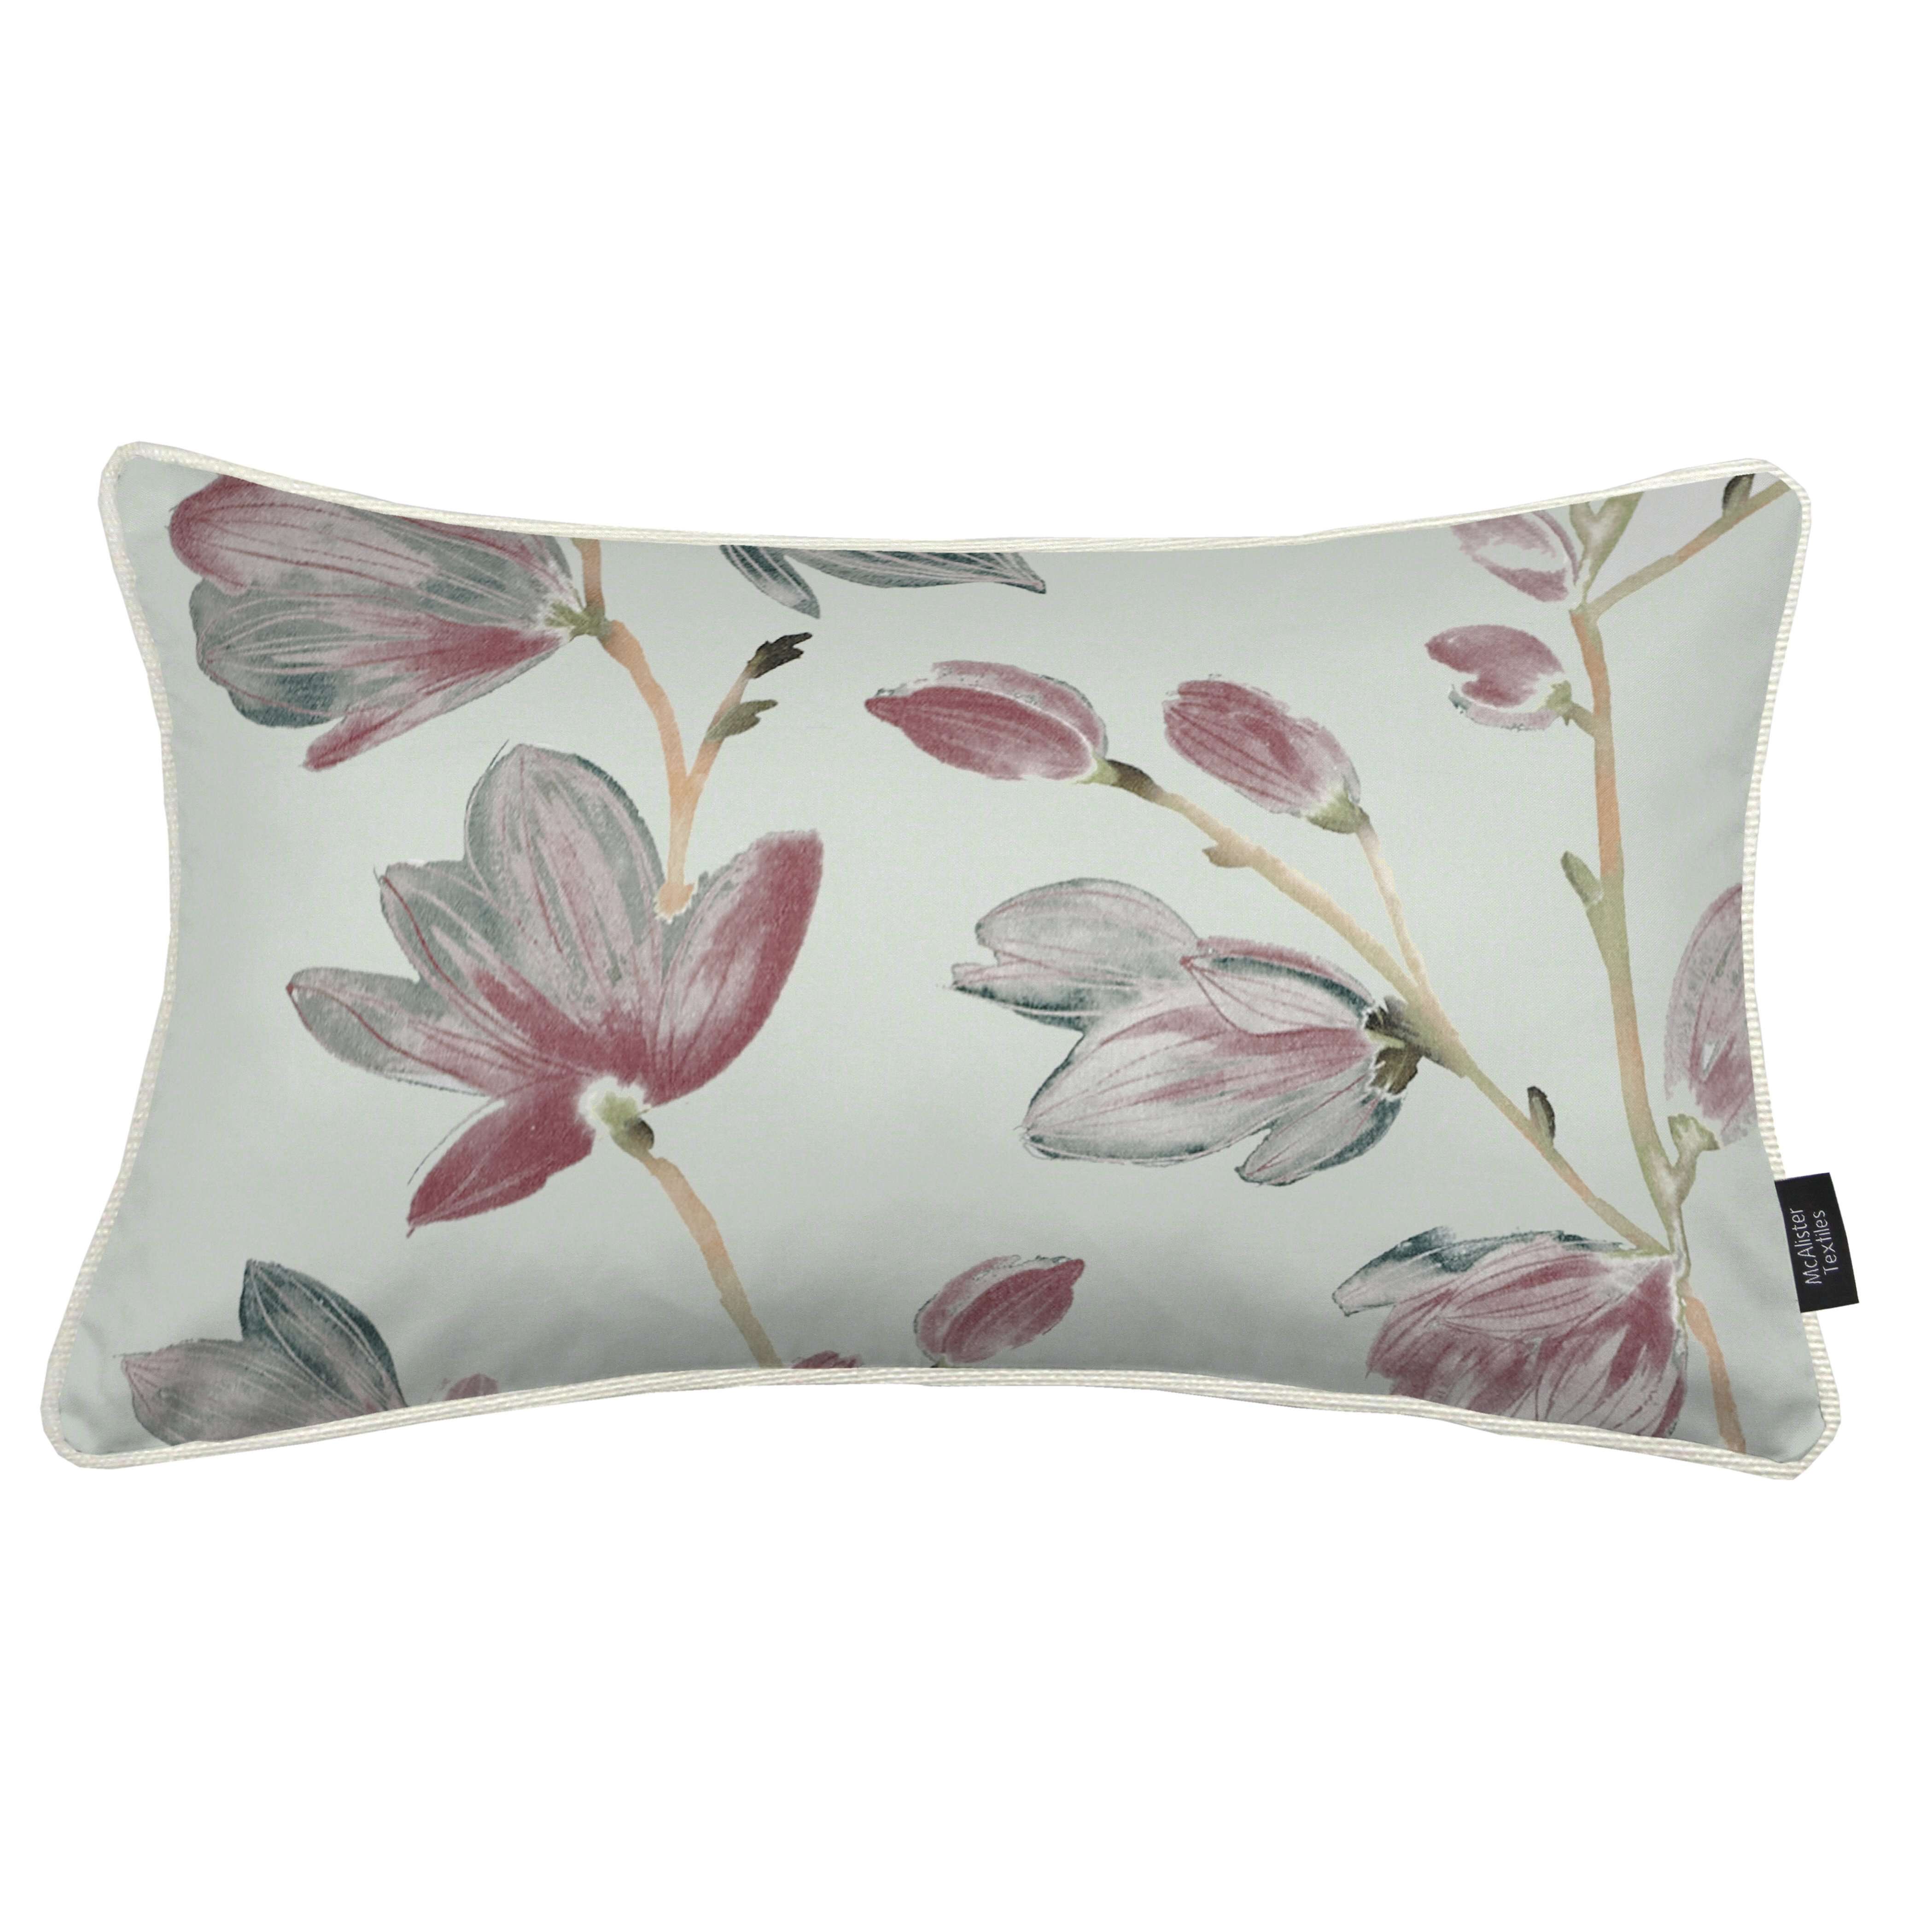 McAlister Textiles Magnolia Rose Floral Cotton Print Pillows Pillow Cover Only 50cm x 30cm 